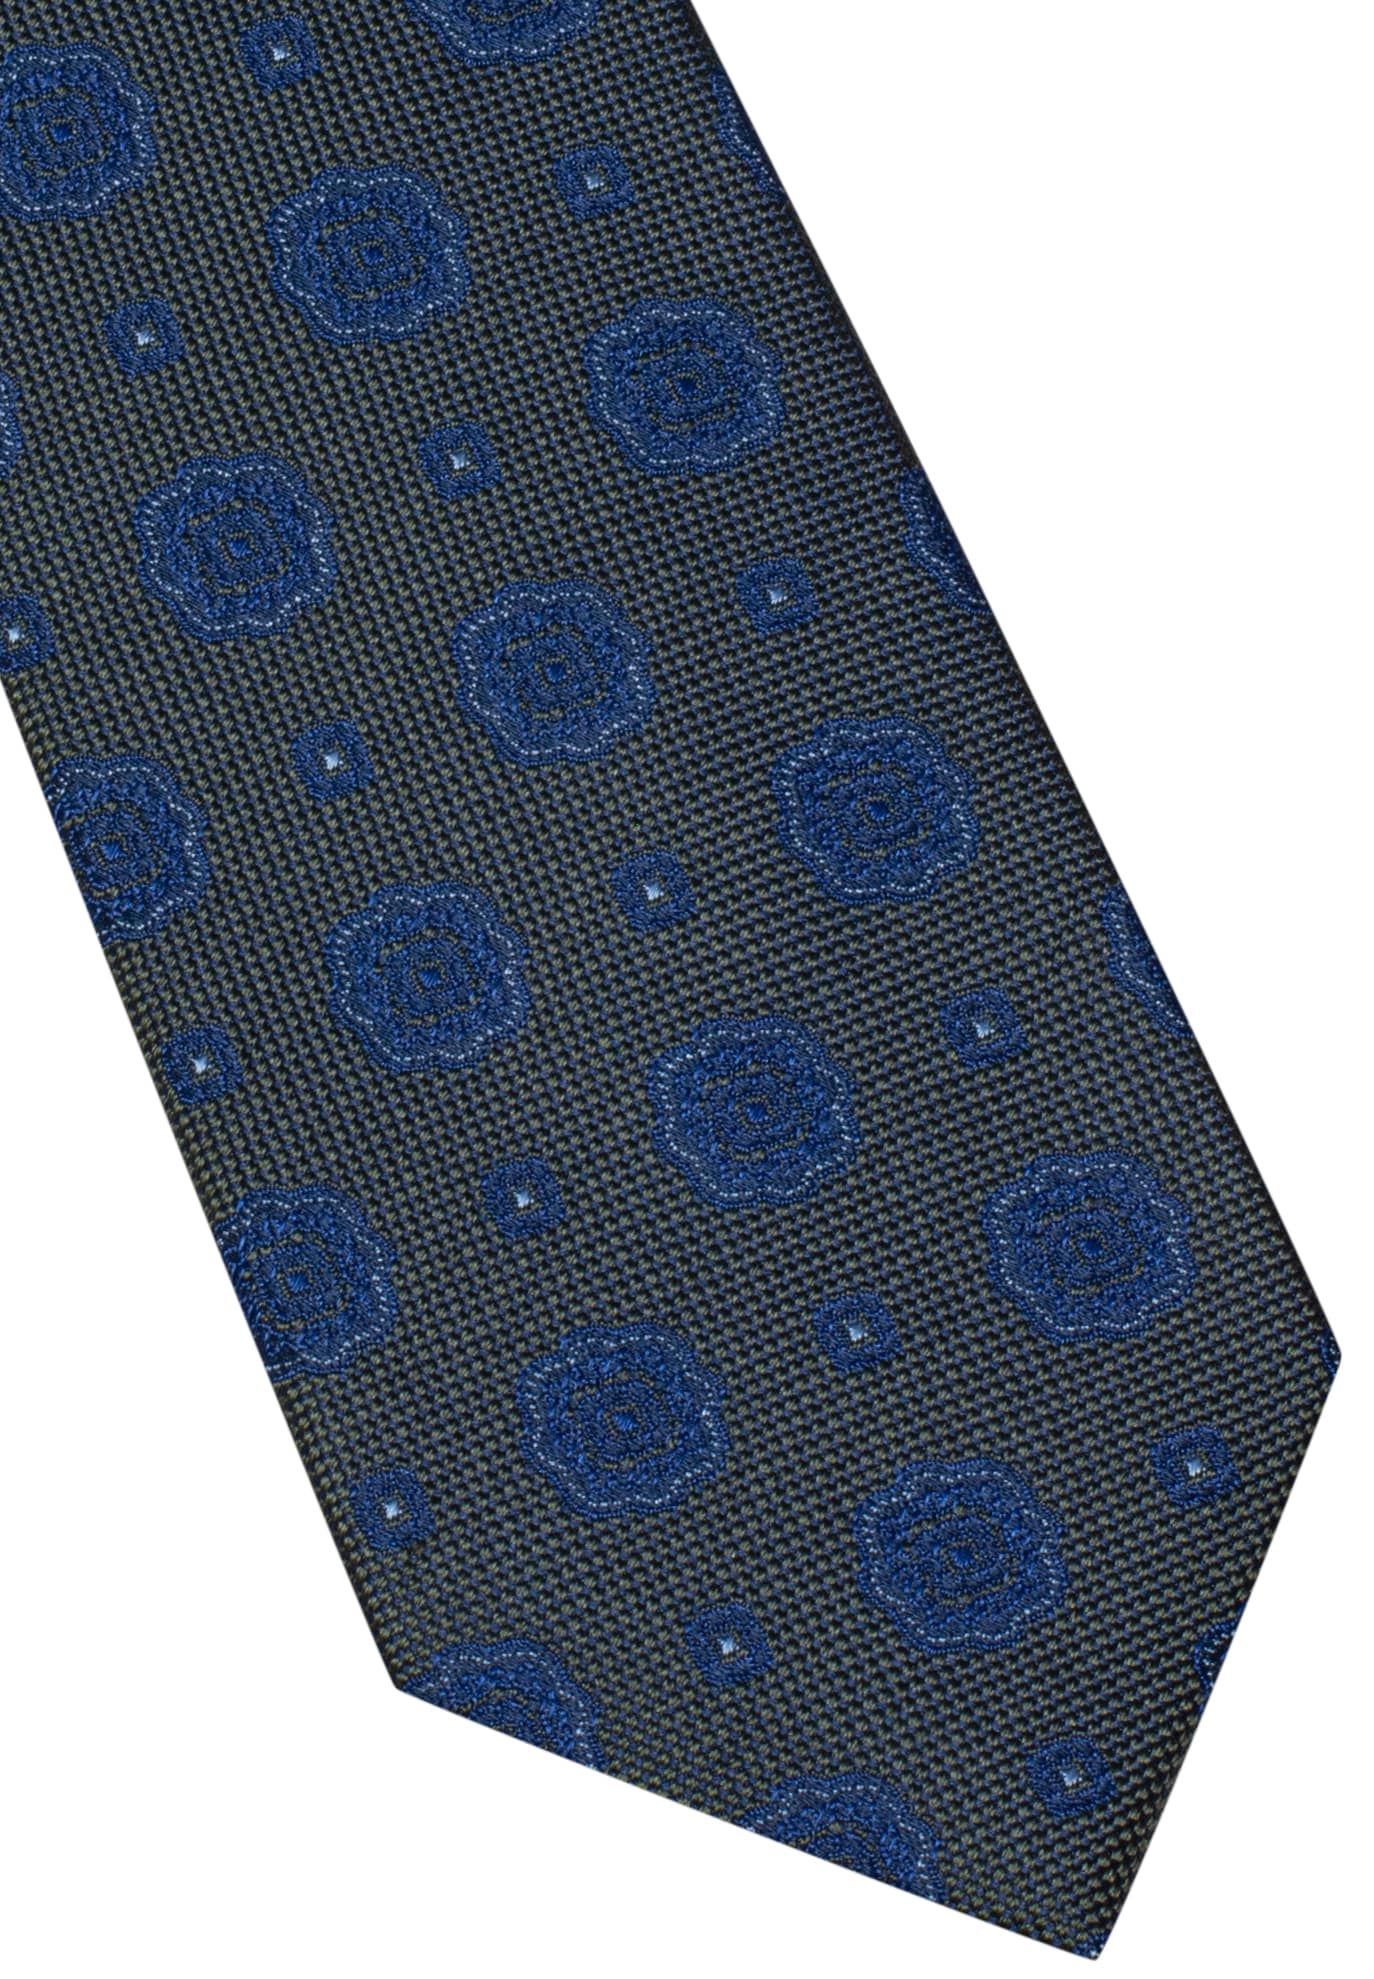 Krawatte in blau/grün gemustert | blau/grün | 142 | 1AC00183-81-48-142